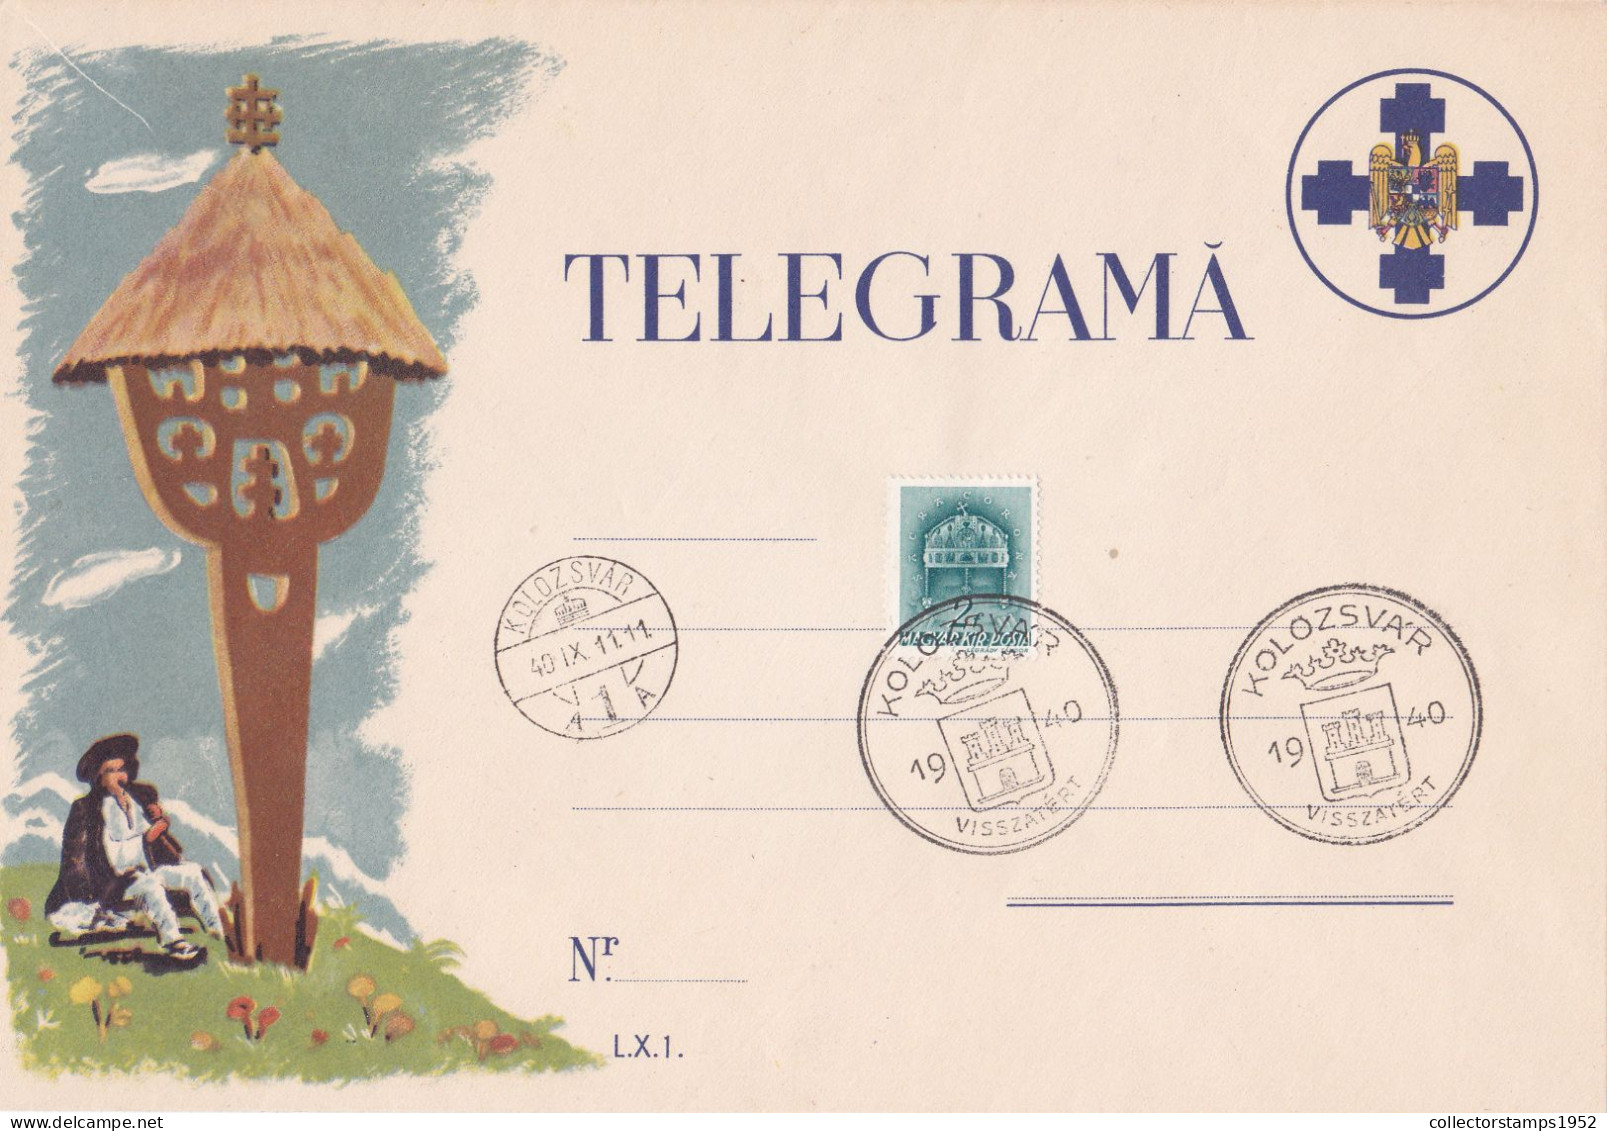 VERY RARE TELEGRAMME,SHEPHERD ,MUSHROOMS,COVERS, ROMANIA - Telegraphenmarken